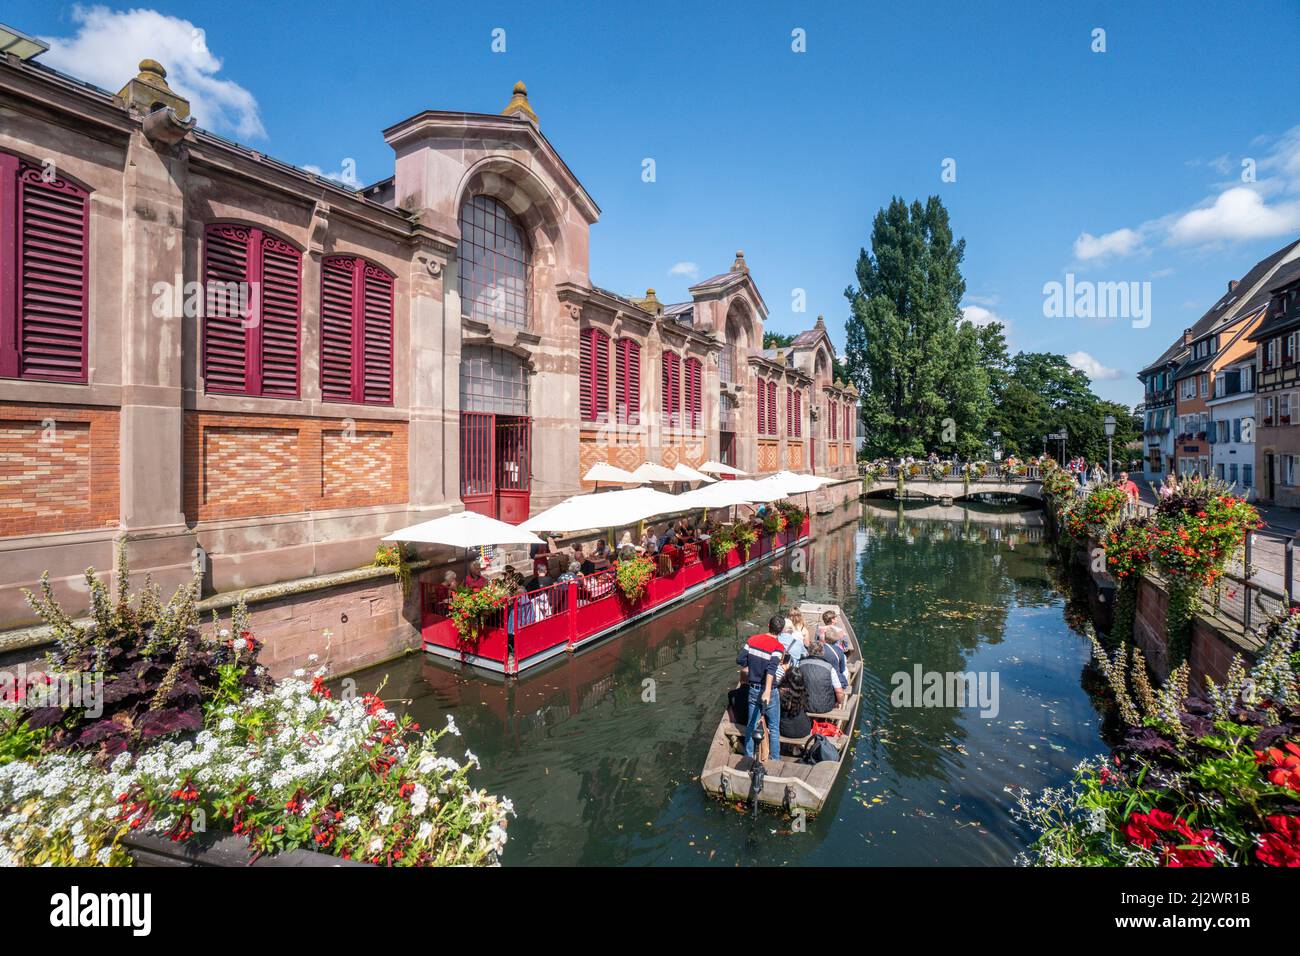 Markthalle in Little Venice, Holzboot mit Touristen, Kanal, Colmar, Elsass, Frankreich, Europa Stockfoto